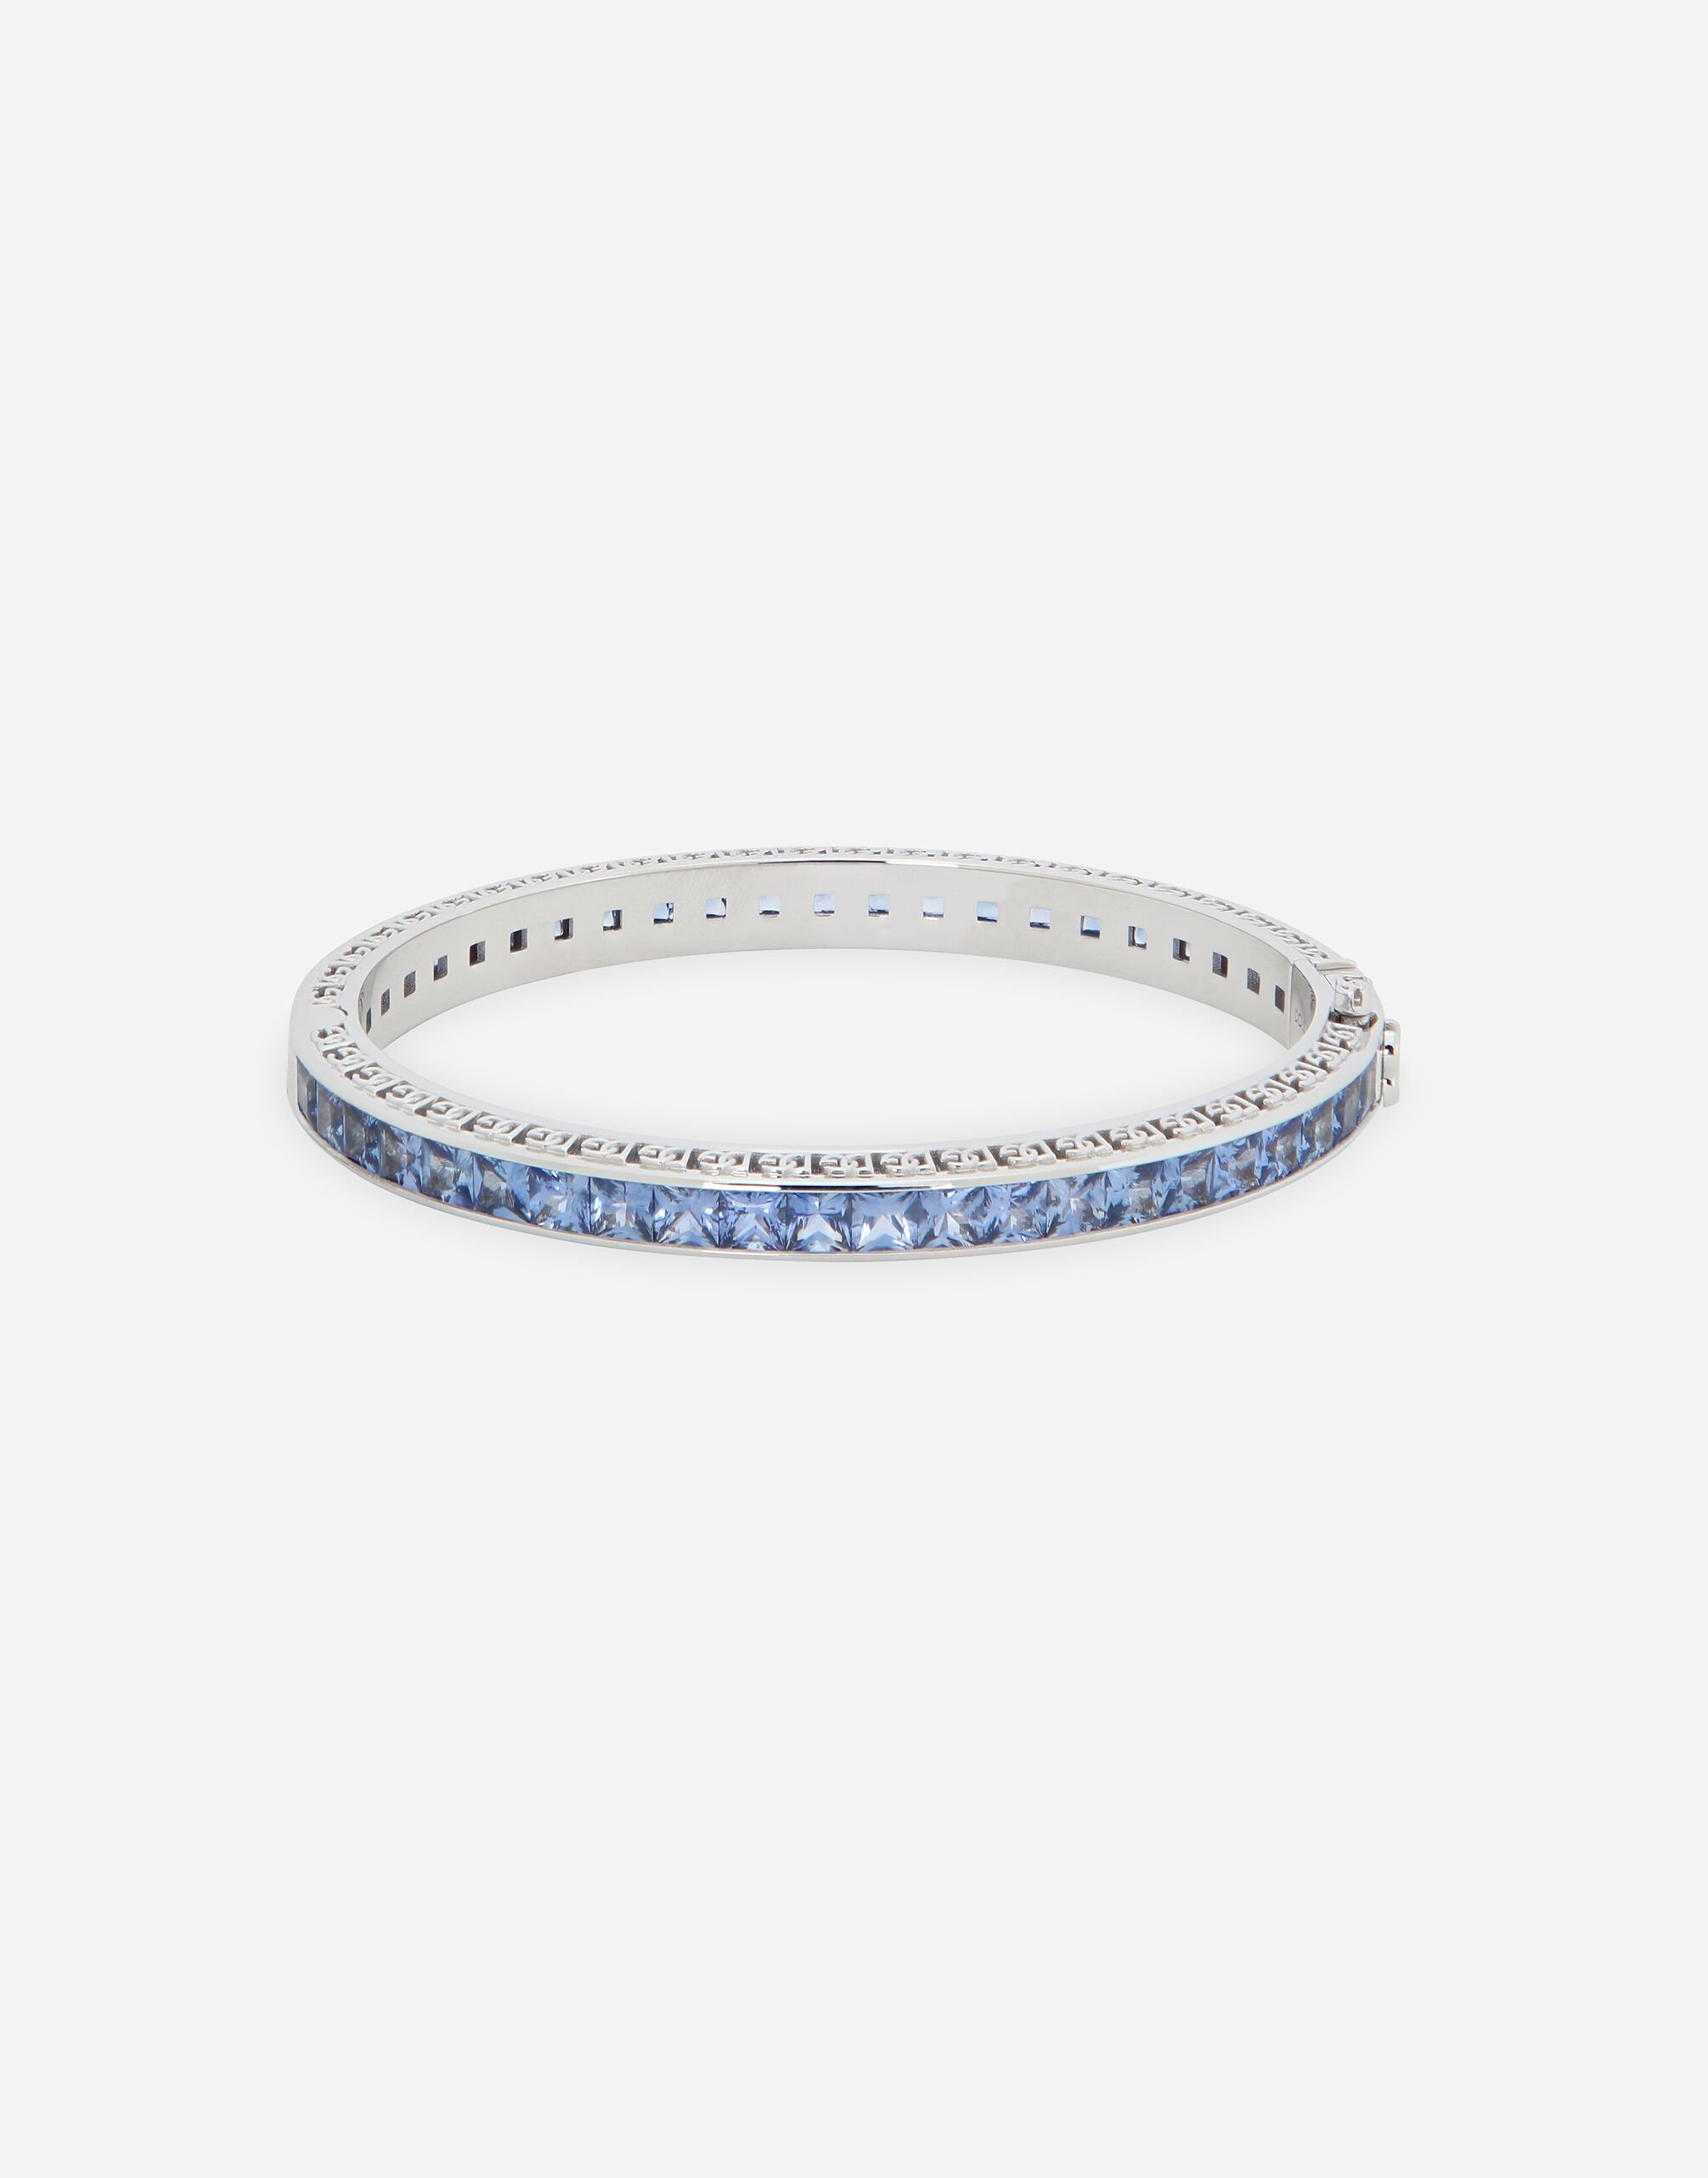 Dolce & Gabbana Anna bracelet in white gold 18kt with blue sapphires Gold WBQA1GWQC01